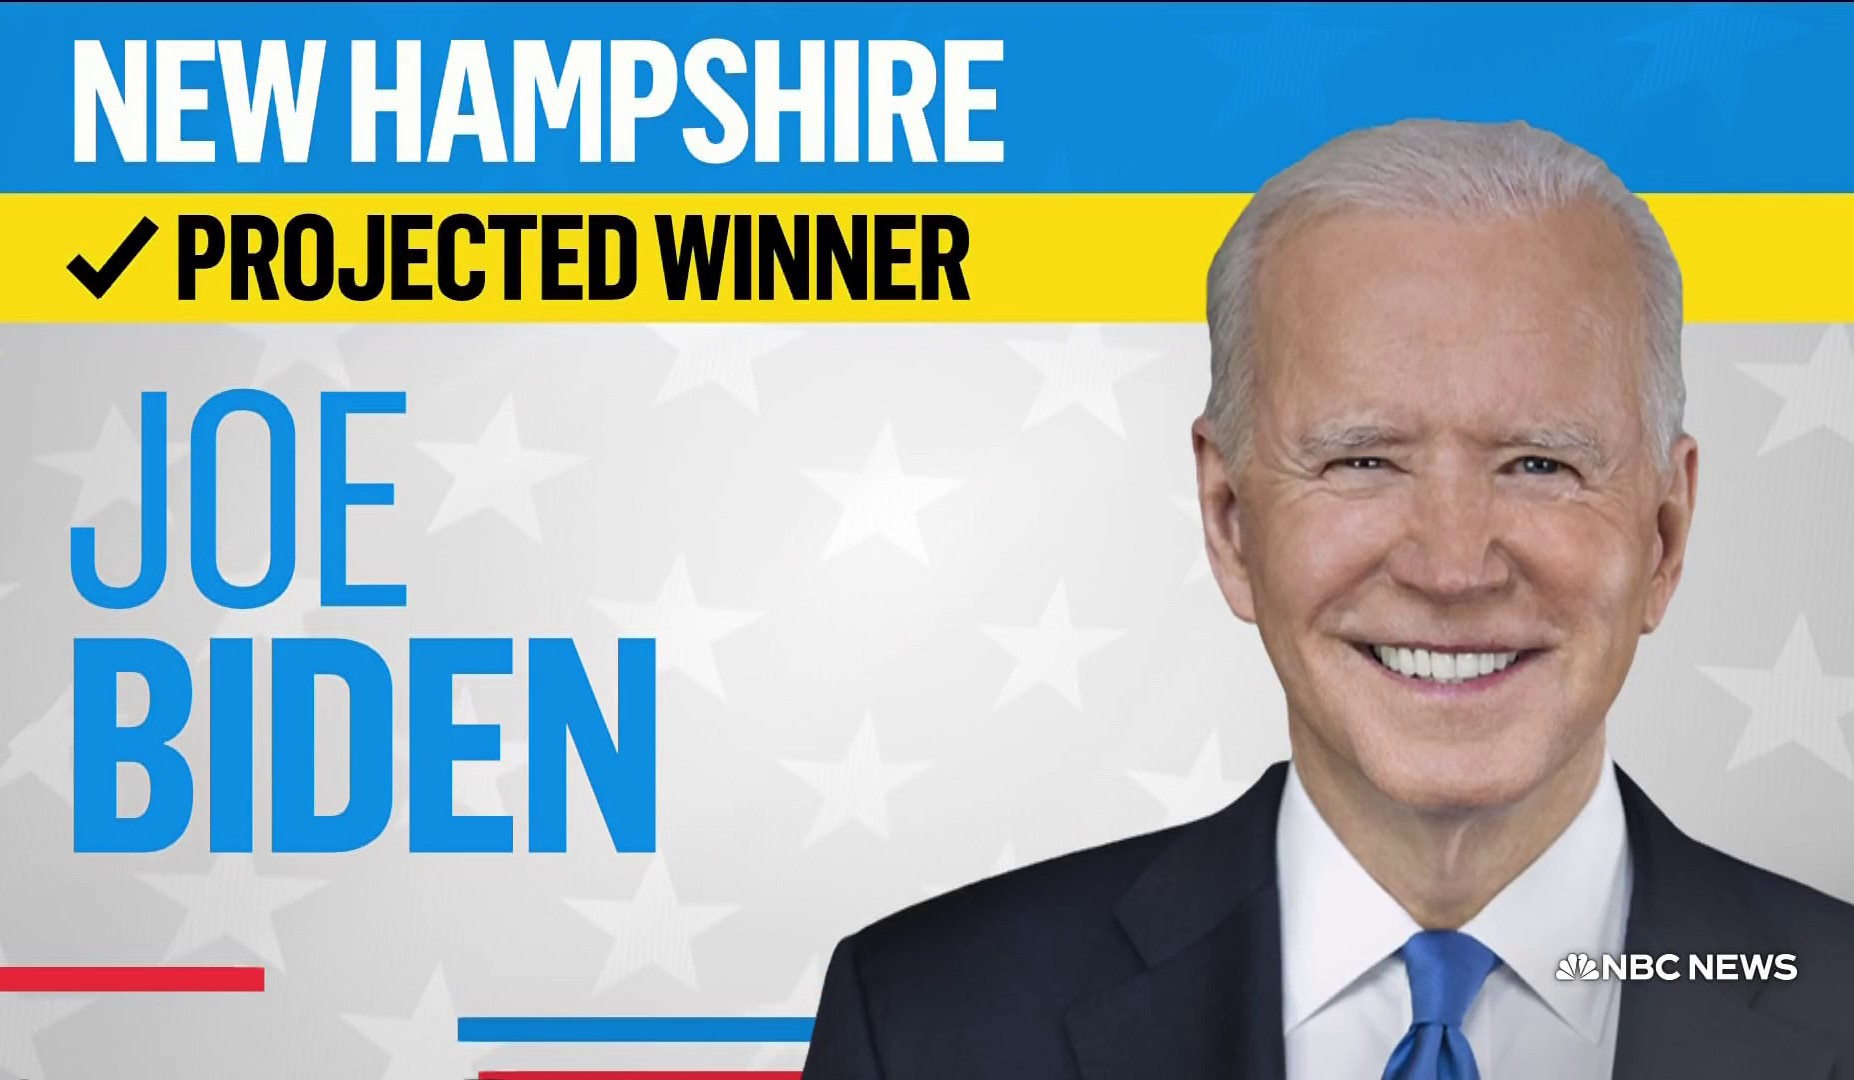 Biden wins New Hampshire primary through a write-in effort